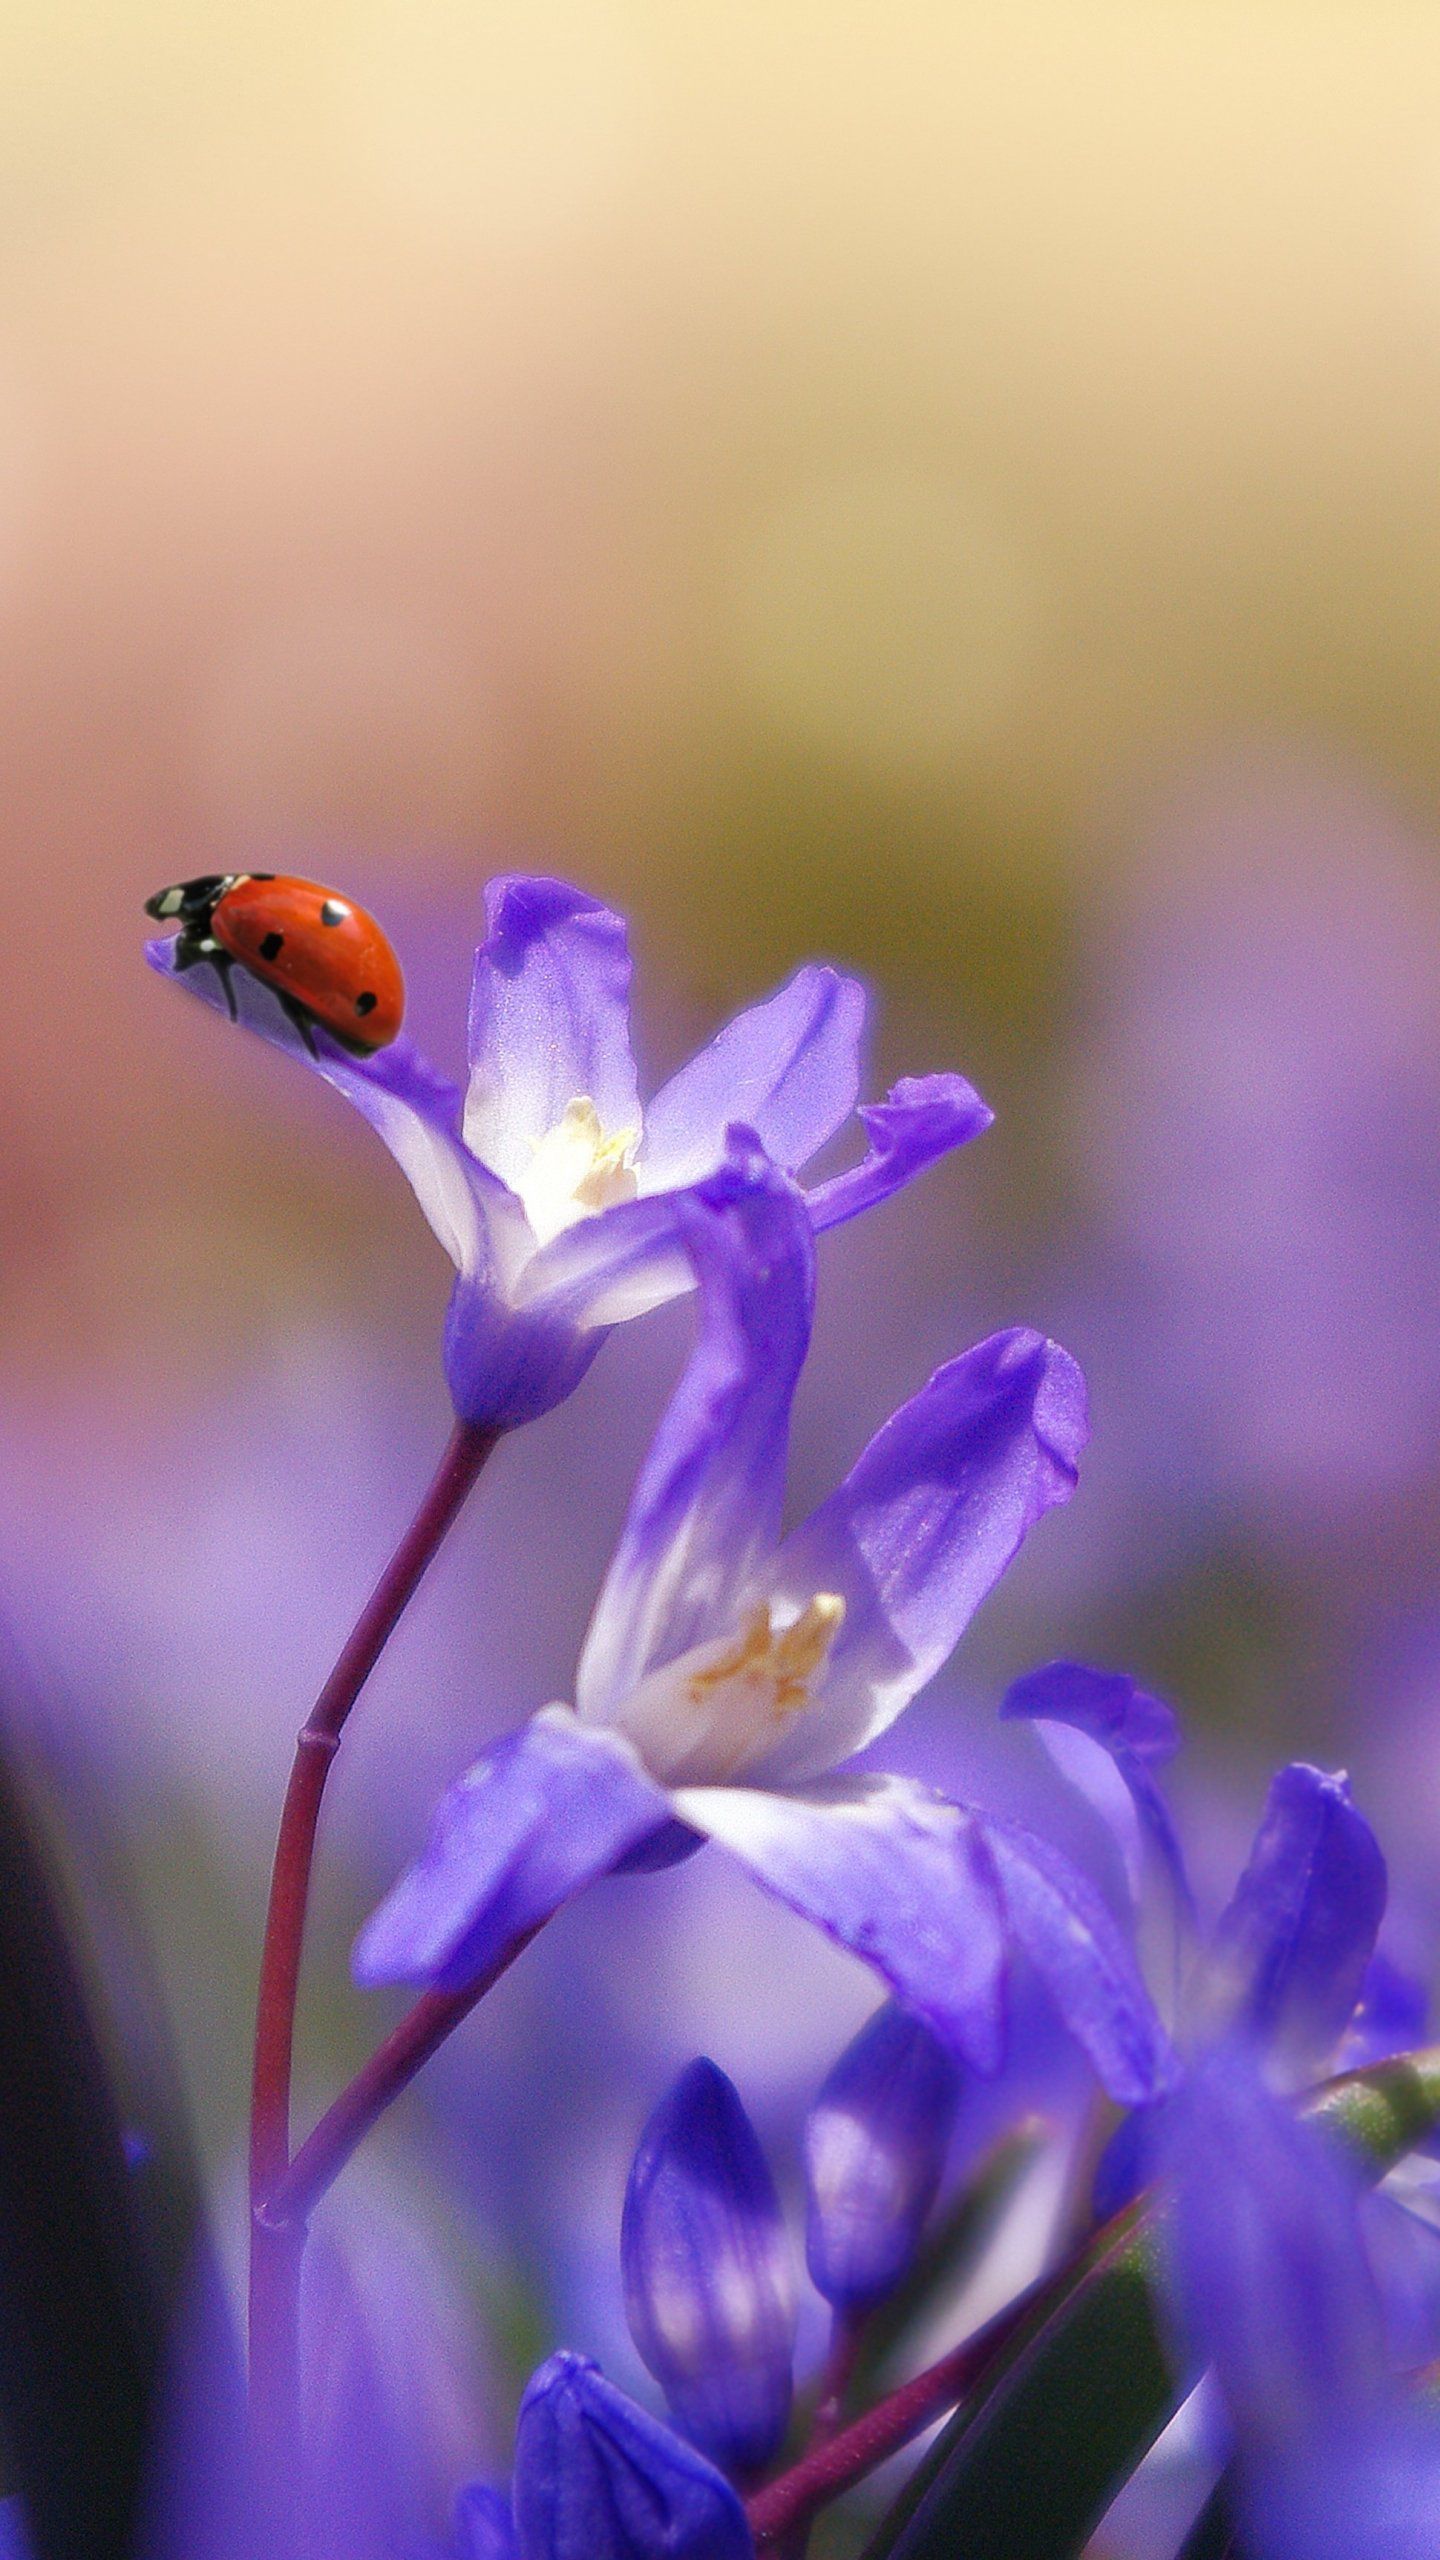 Ladybug on Purple Flower Wallpaper, Android & Desktop